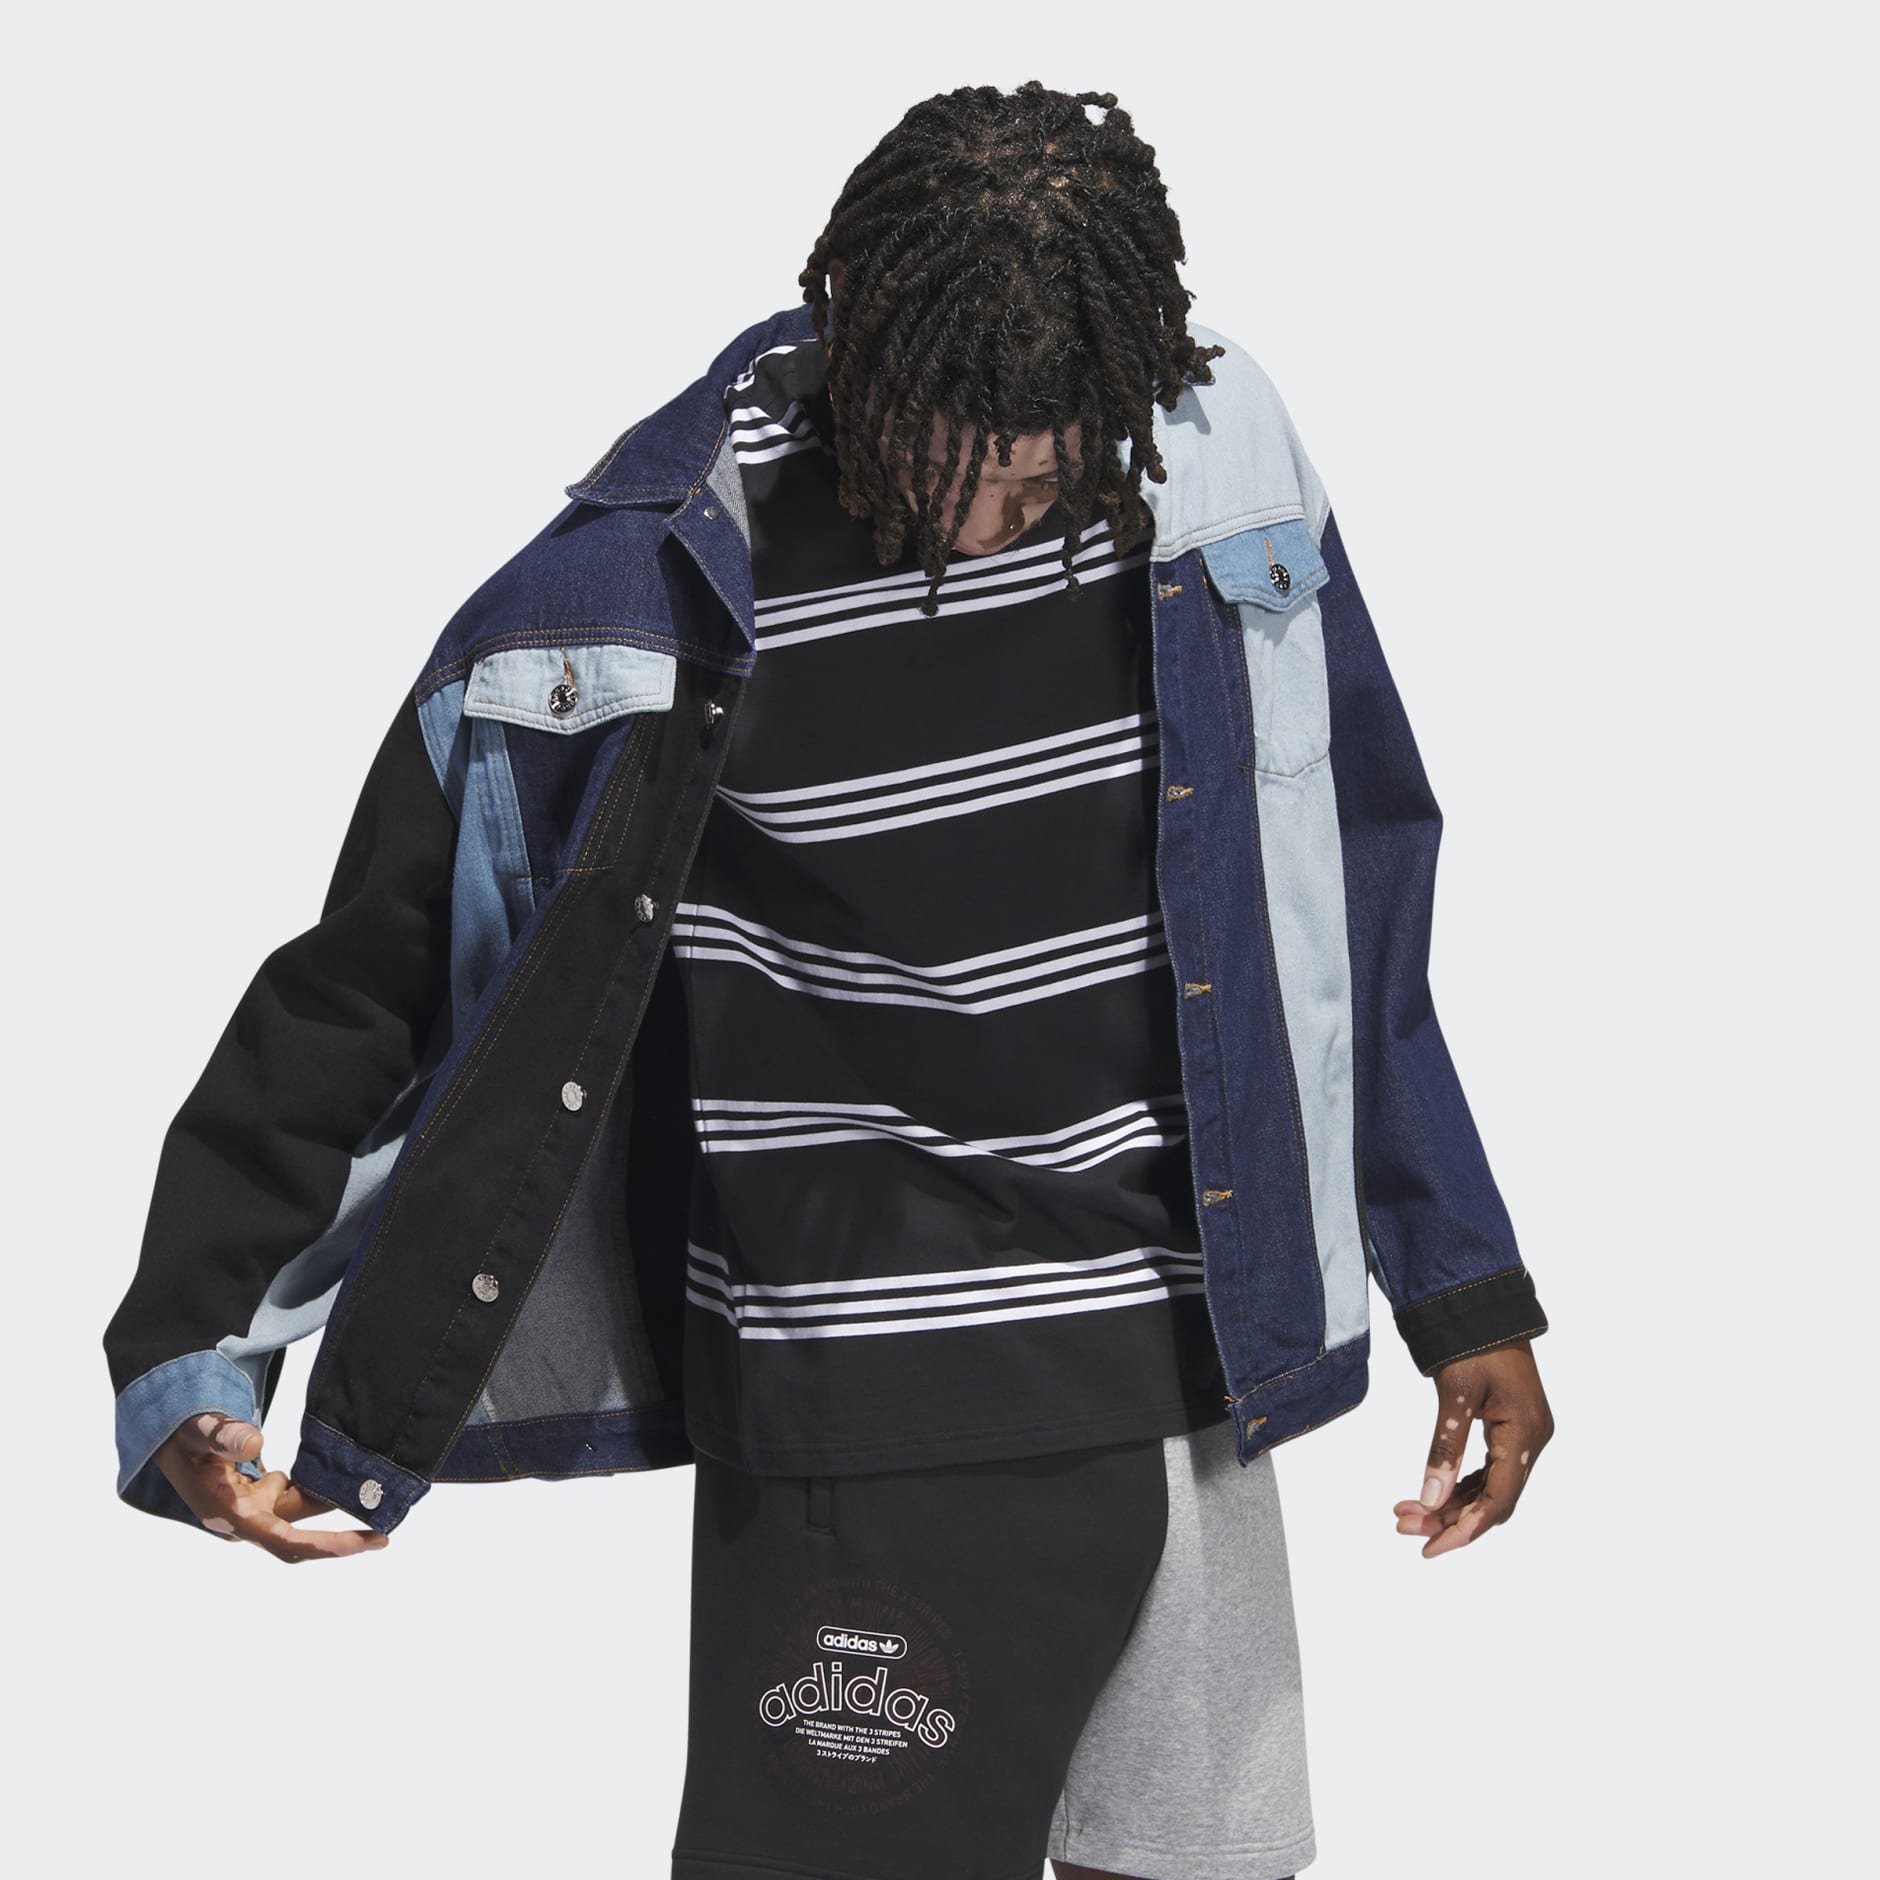 Men\'s Clothing - Engineered 3-Stripes Tee - Black | adidas Oman